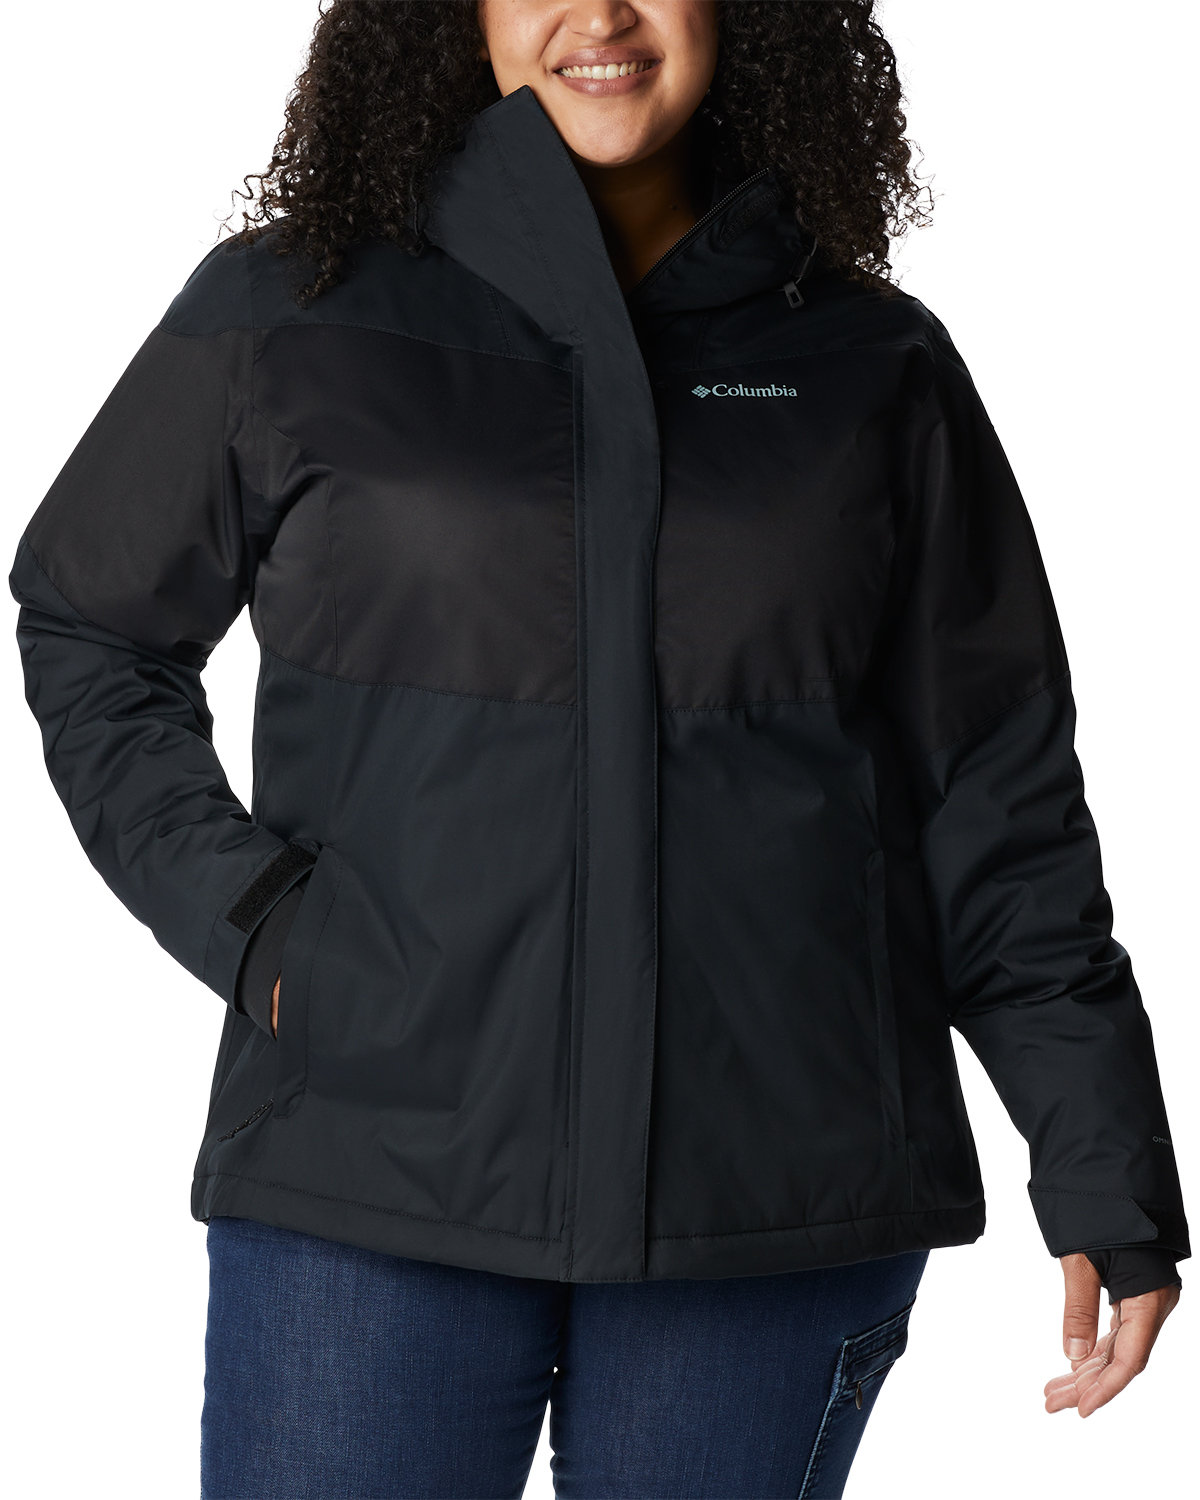 Picture of Columbia Women's Tipton Peak II Insulated Jacket